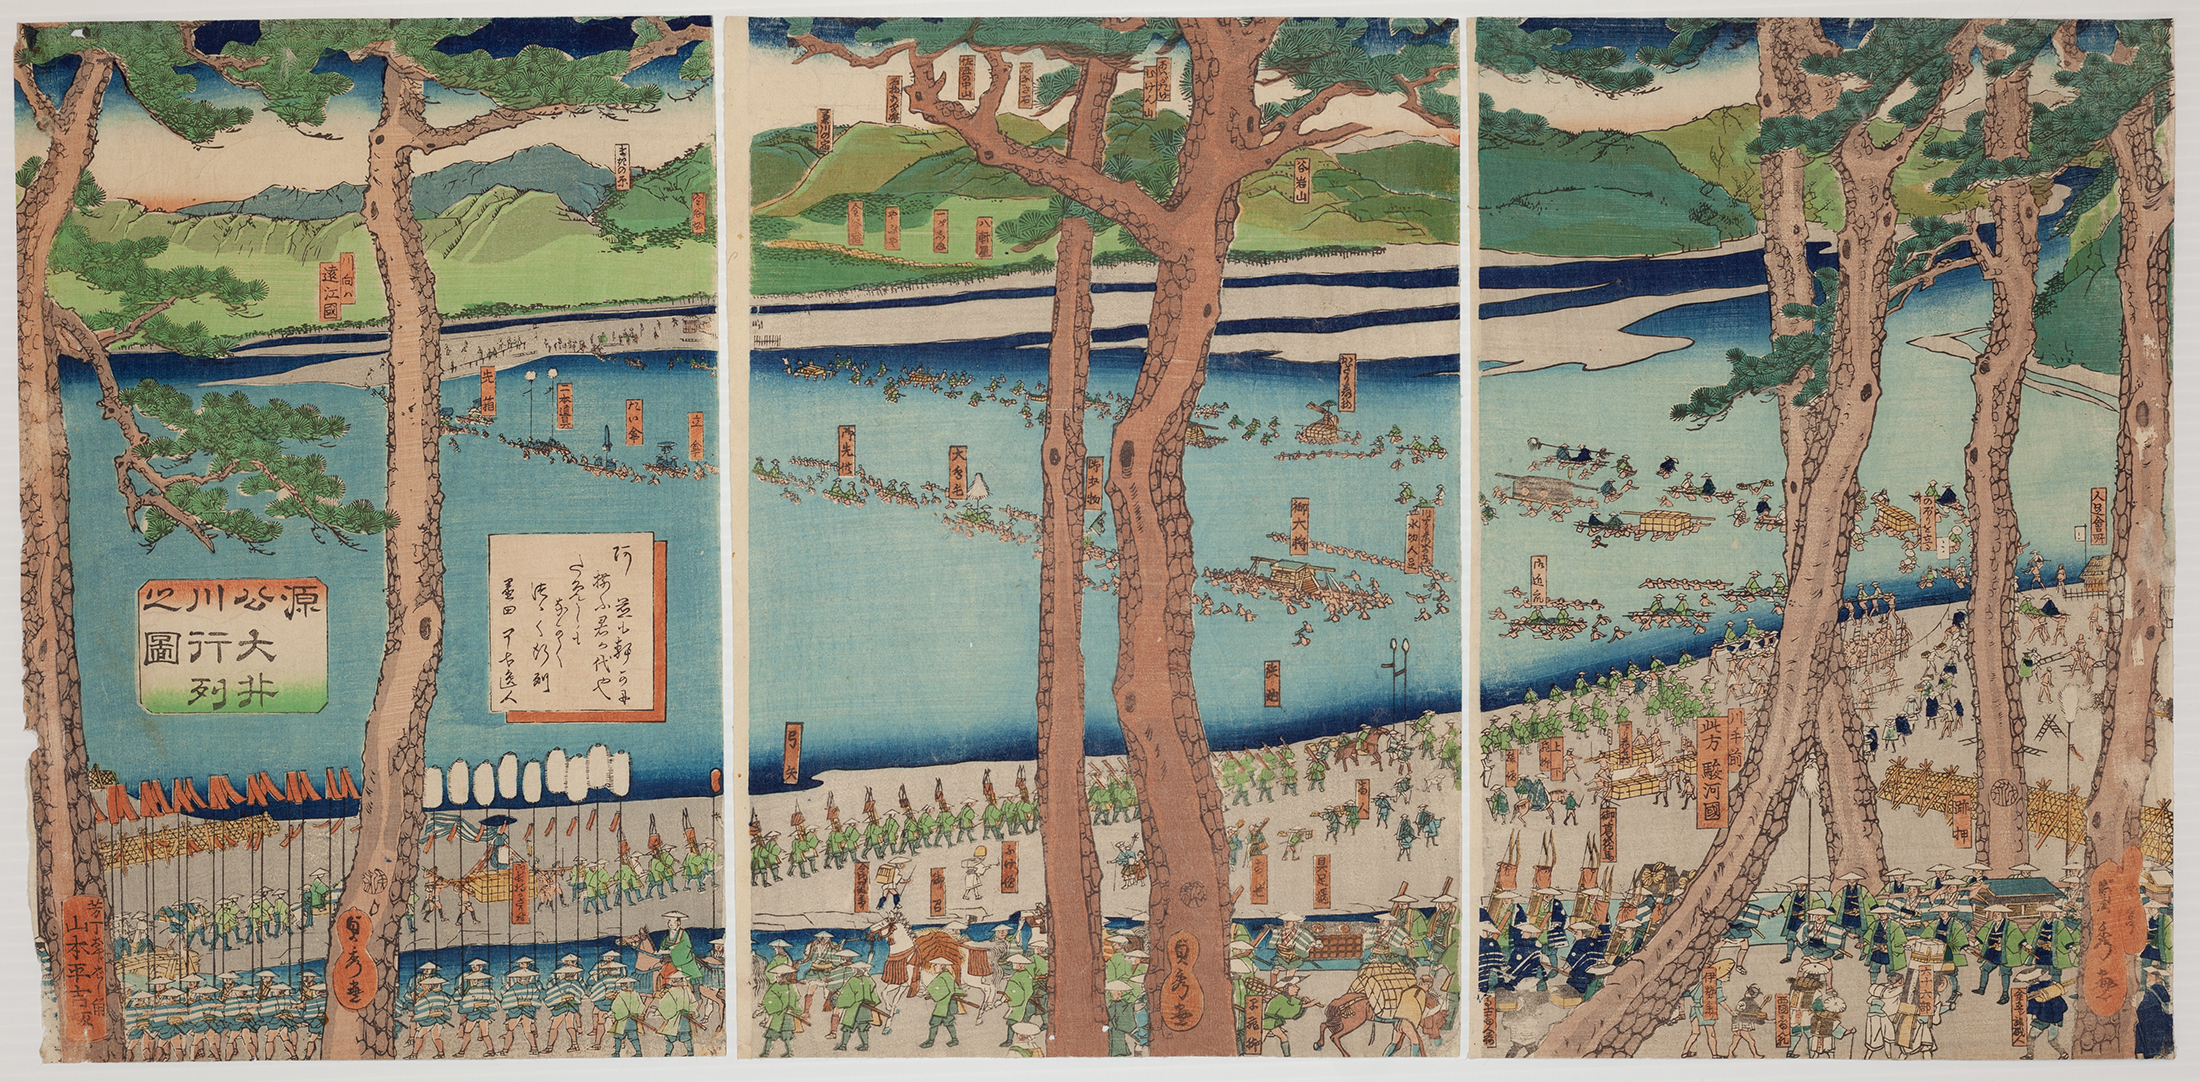 Sadahide, Oi River Crossing, Japanese Woodblock Print